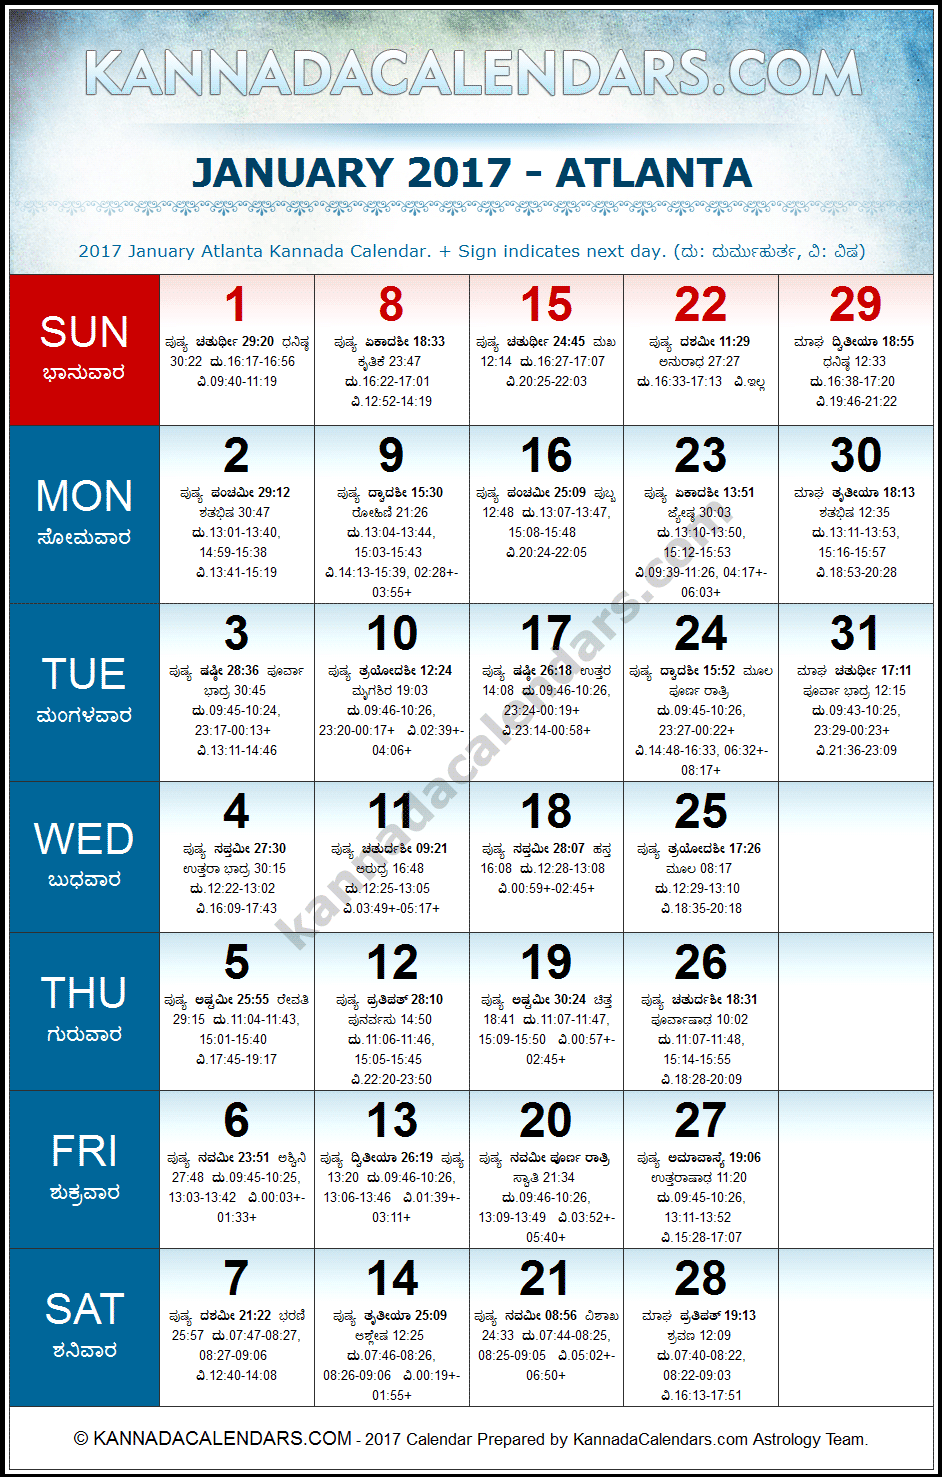 January 2017 Kannada Calendar for Atlanta, USA